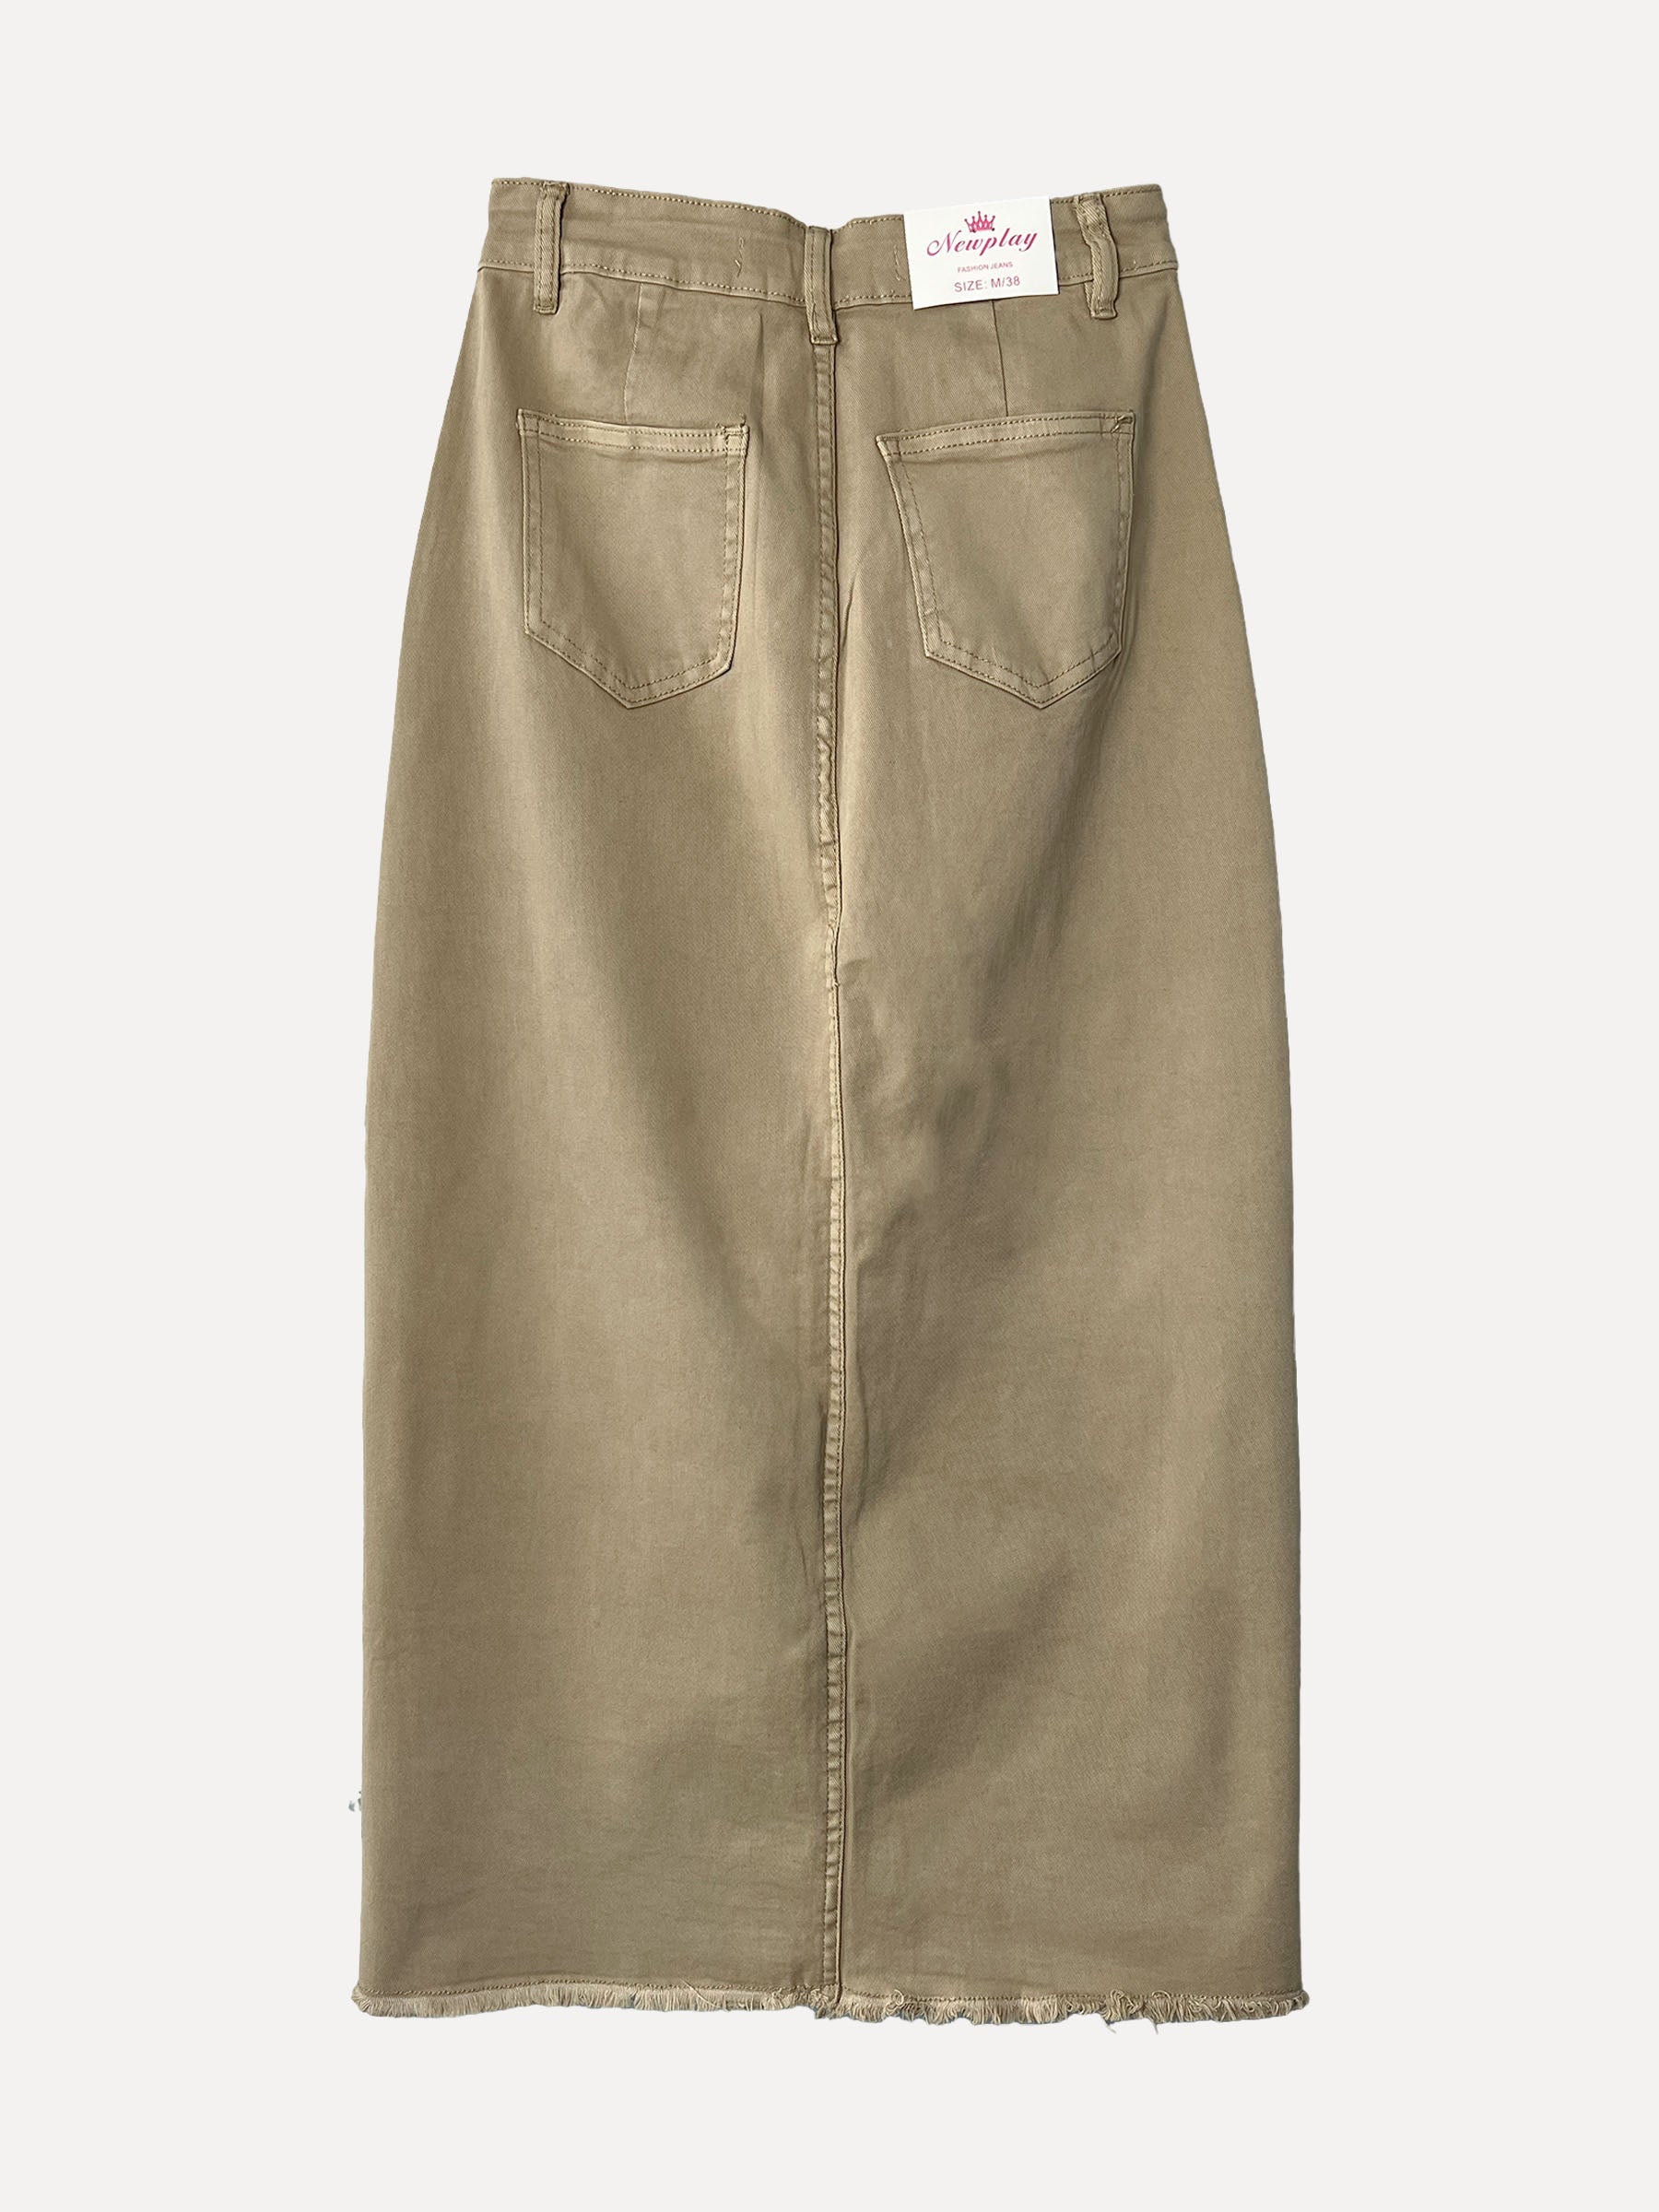 Jeans Skirt F6876, Beige